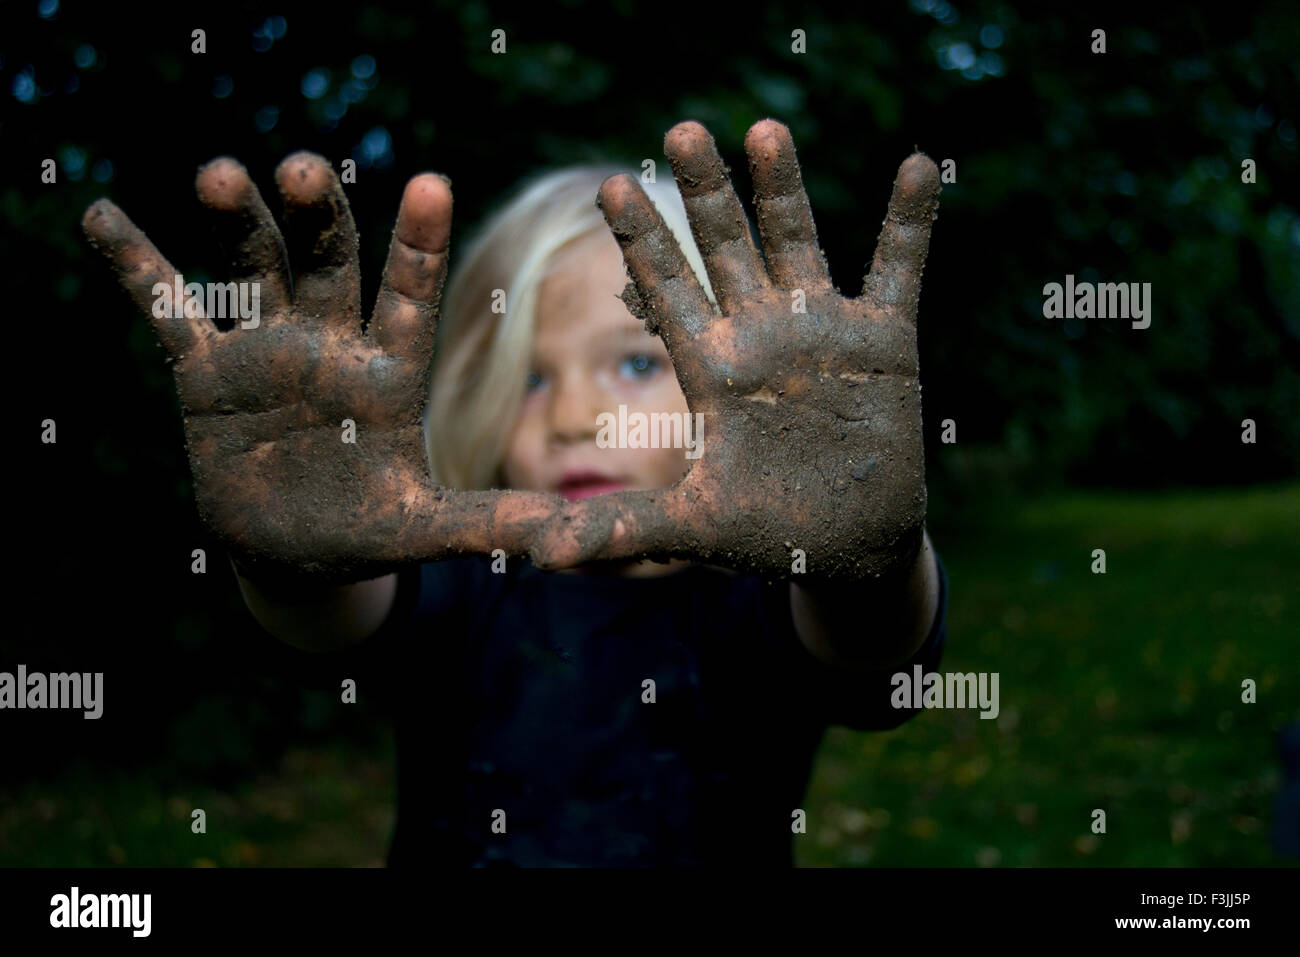 Portrait of little child blond girl showing hands full of dirt Stock Photo